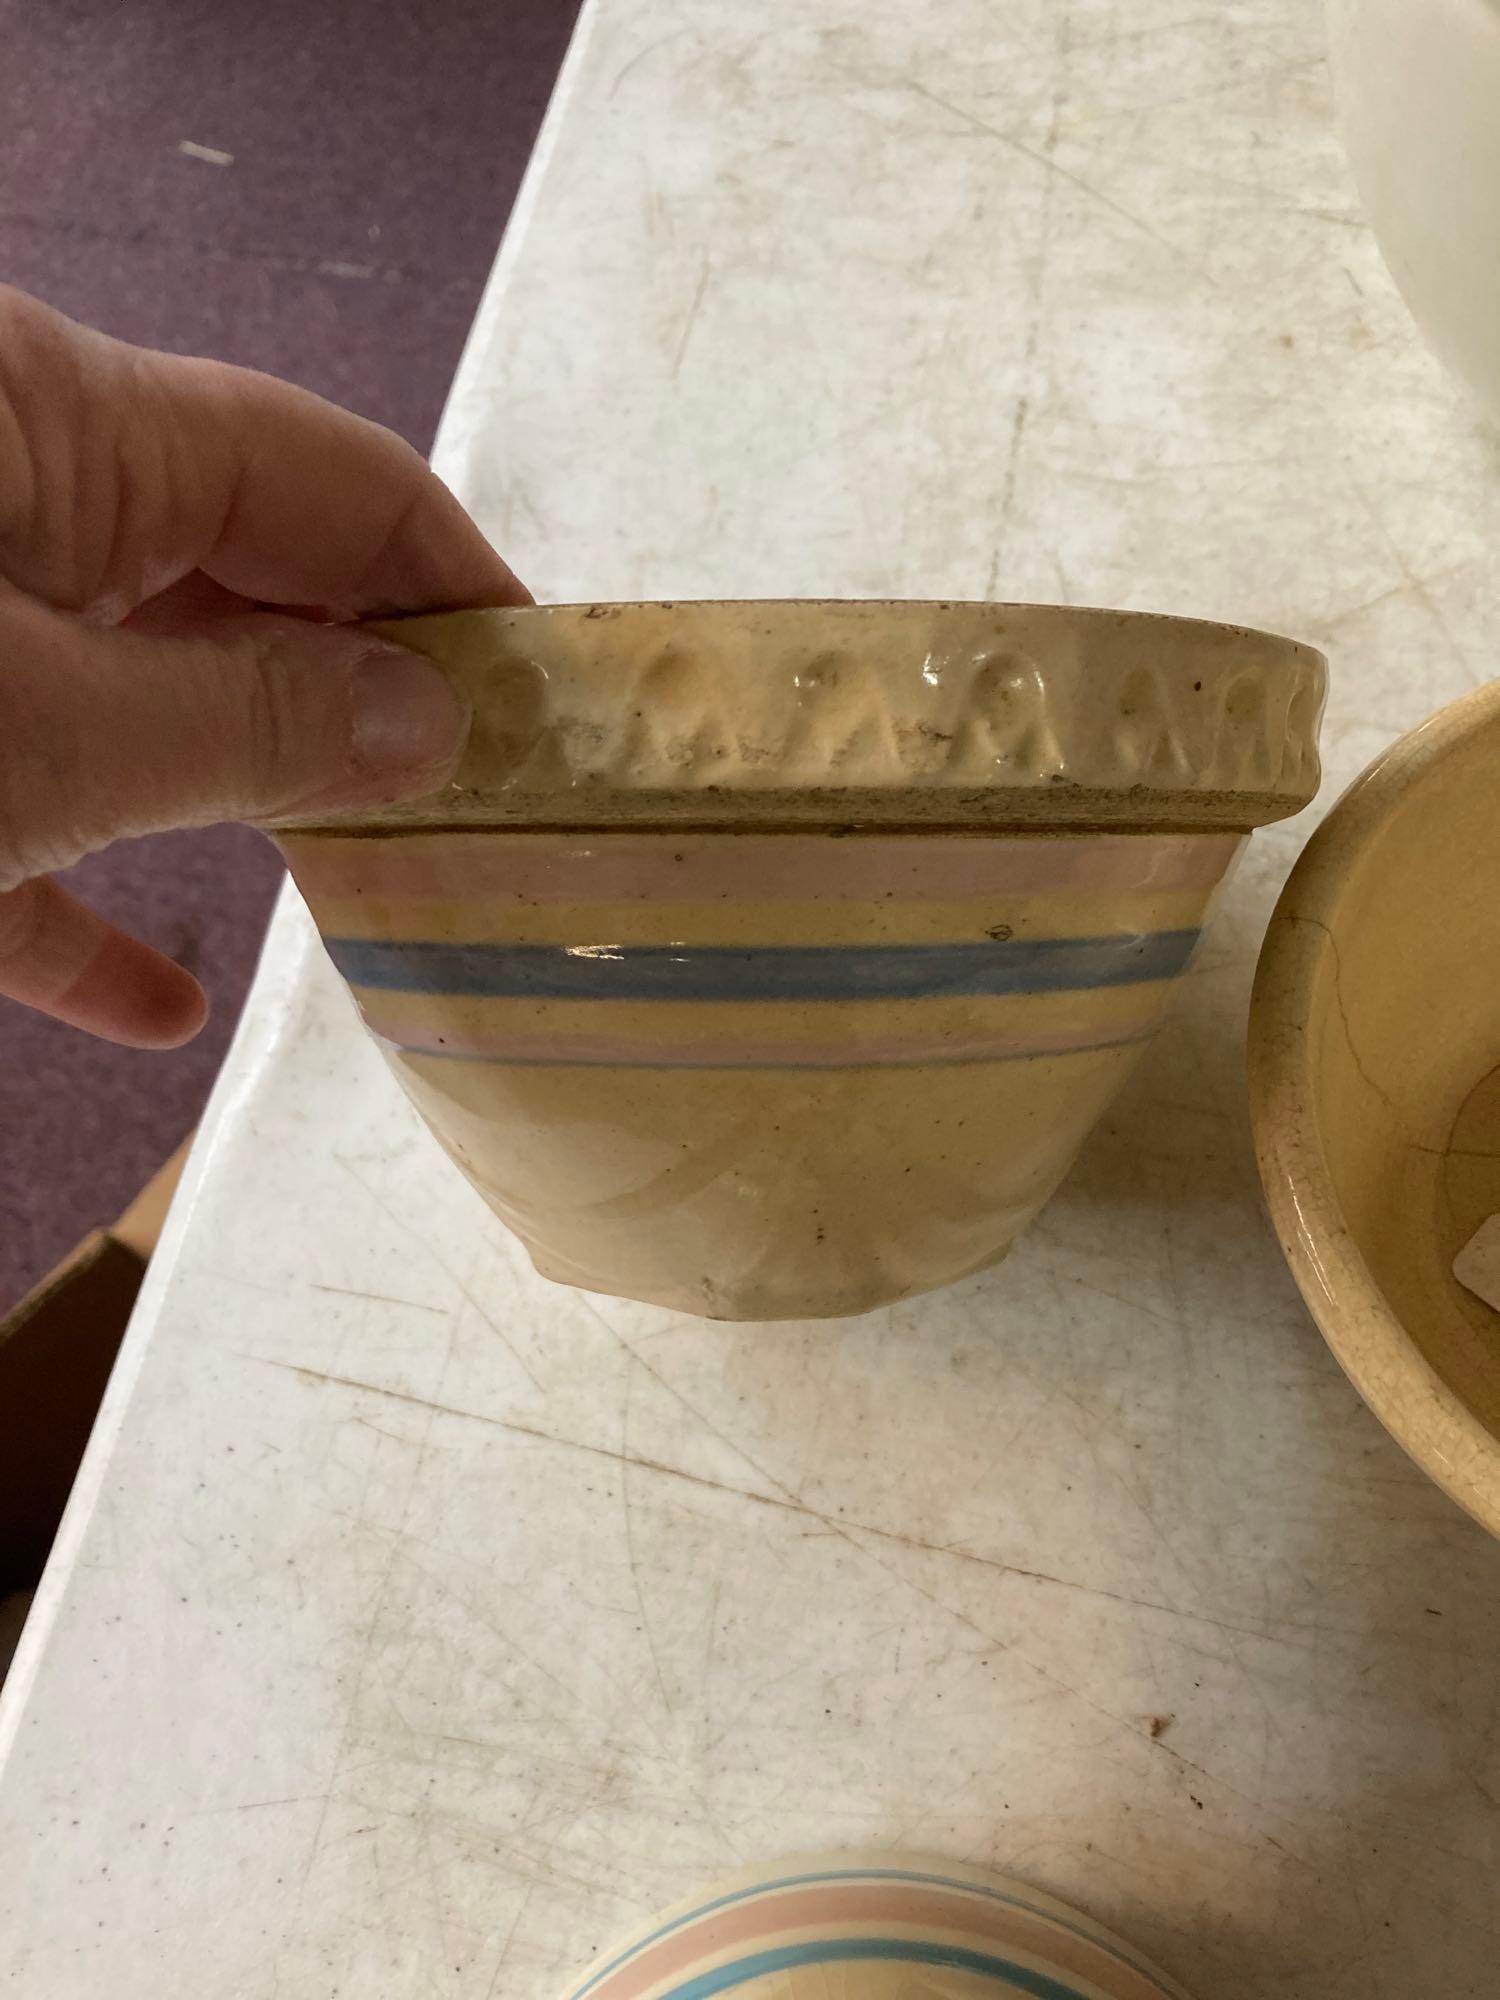 Antique crock pottery bowls , including McCoy